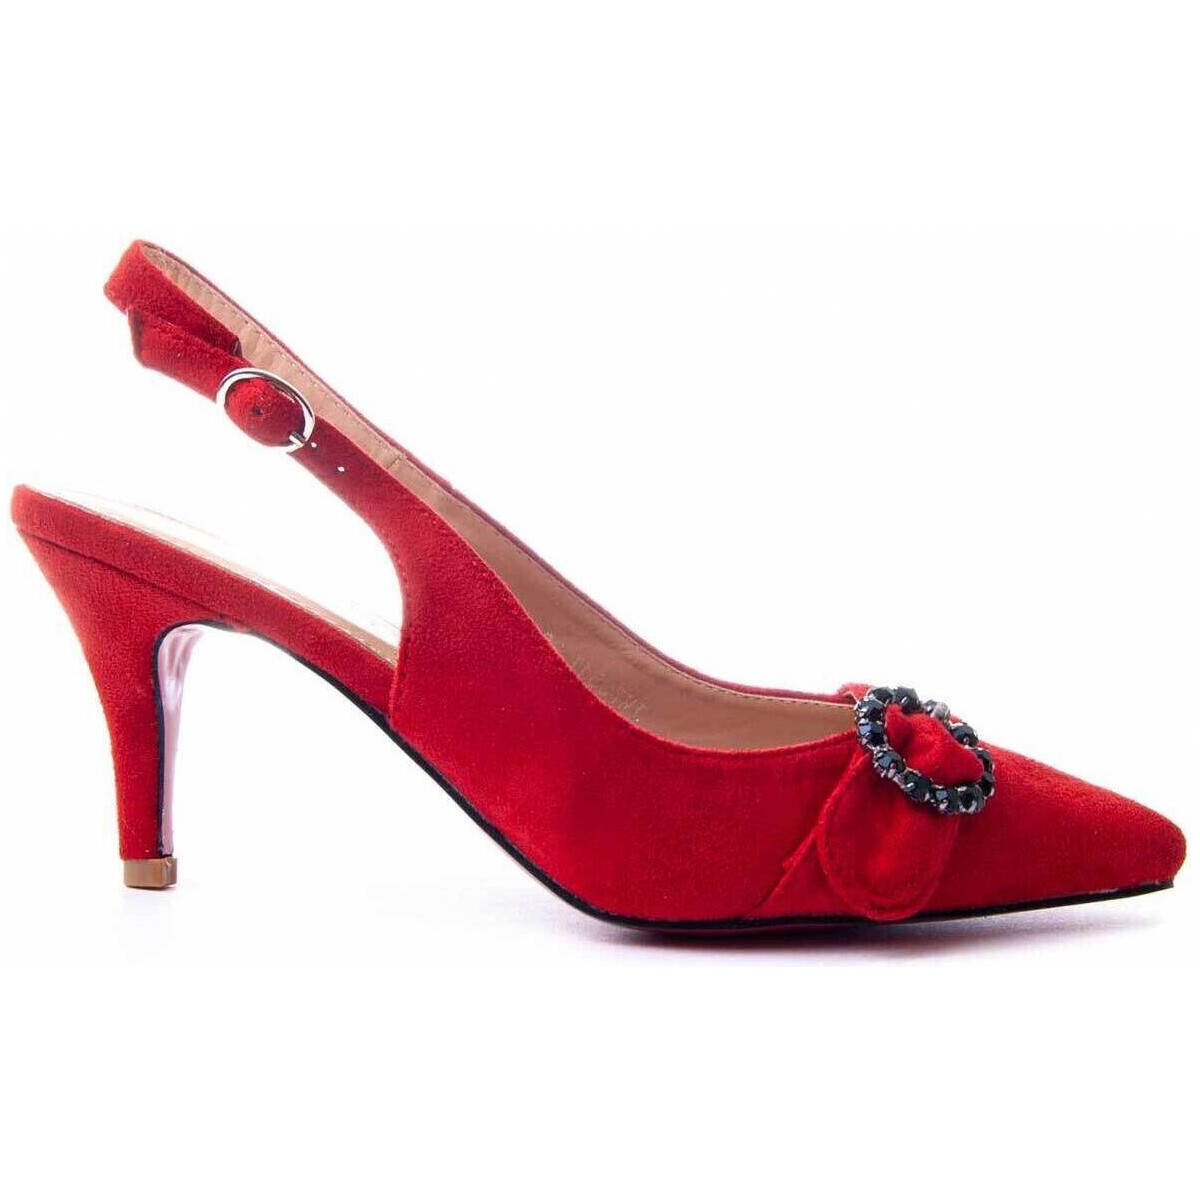 Chaussures Femme Escarpins Leindia 87360 Rouge